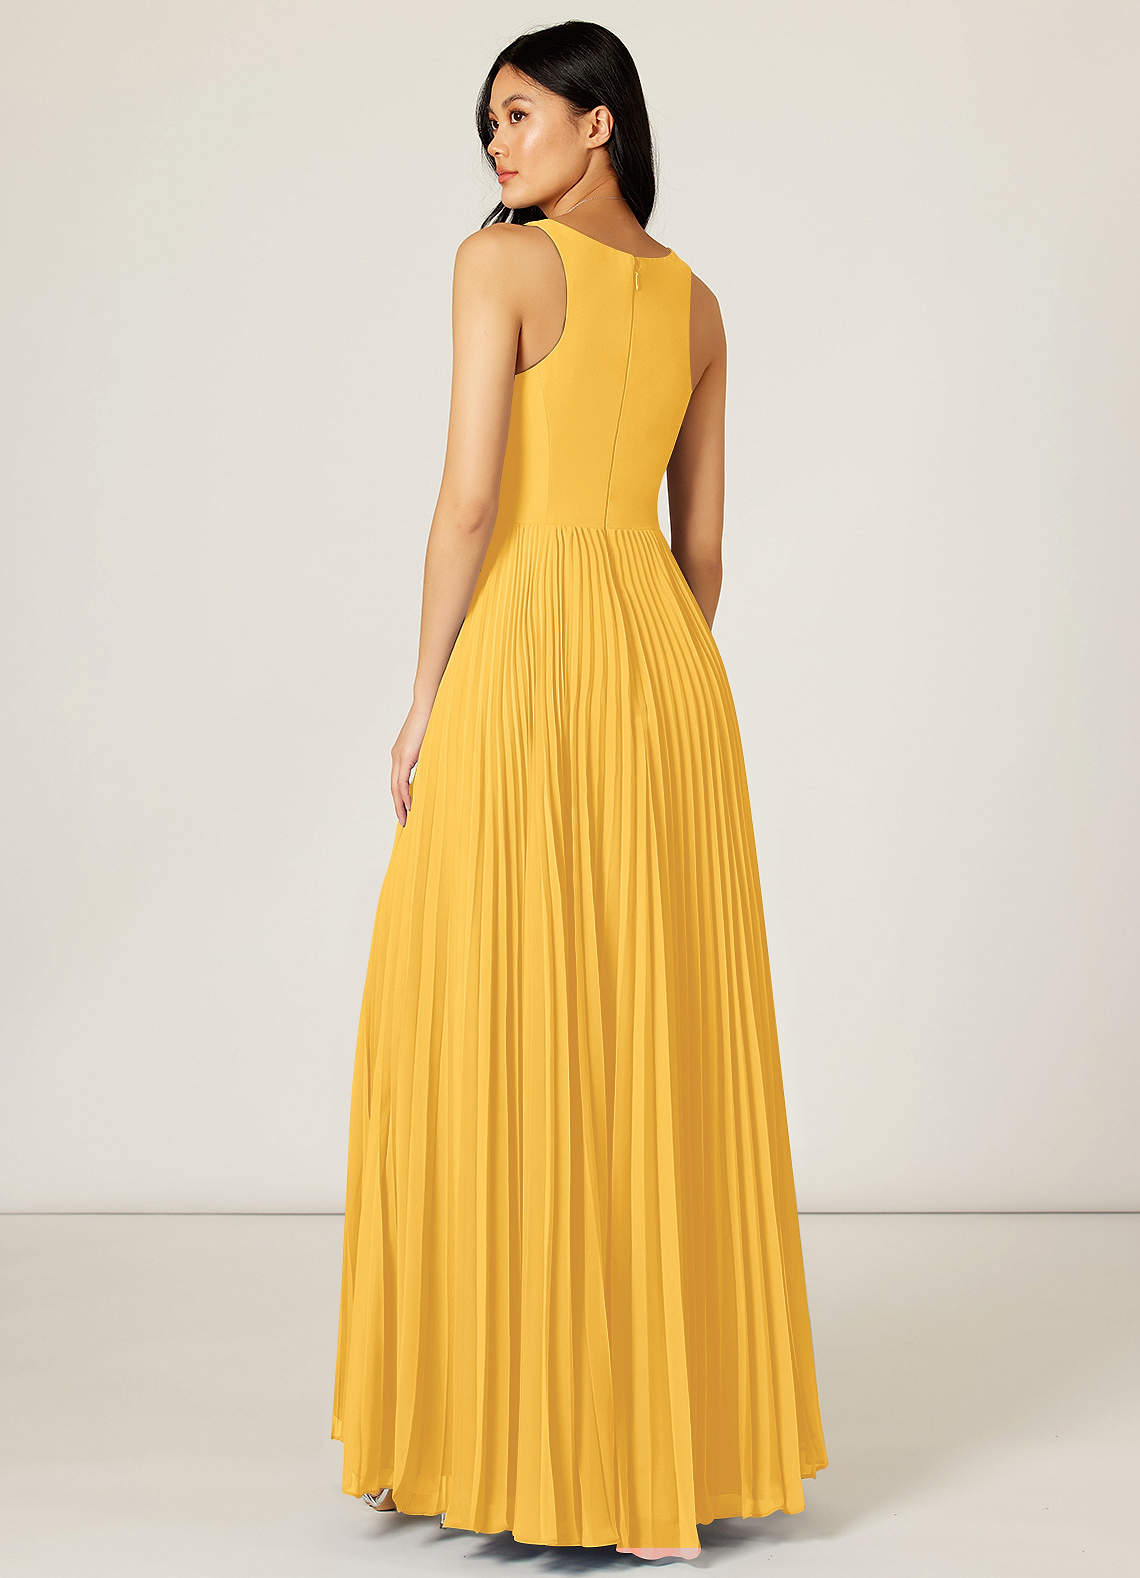 Azazie Lindsey Bridesmaid Dresses A-Line Pleated Chiffon Floor-Length Dress image1